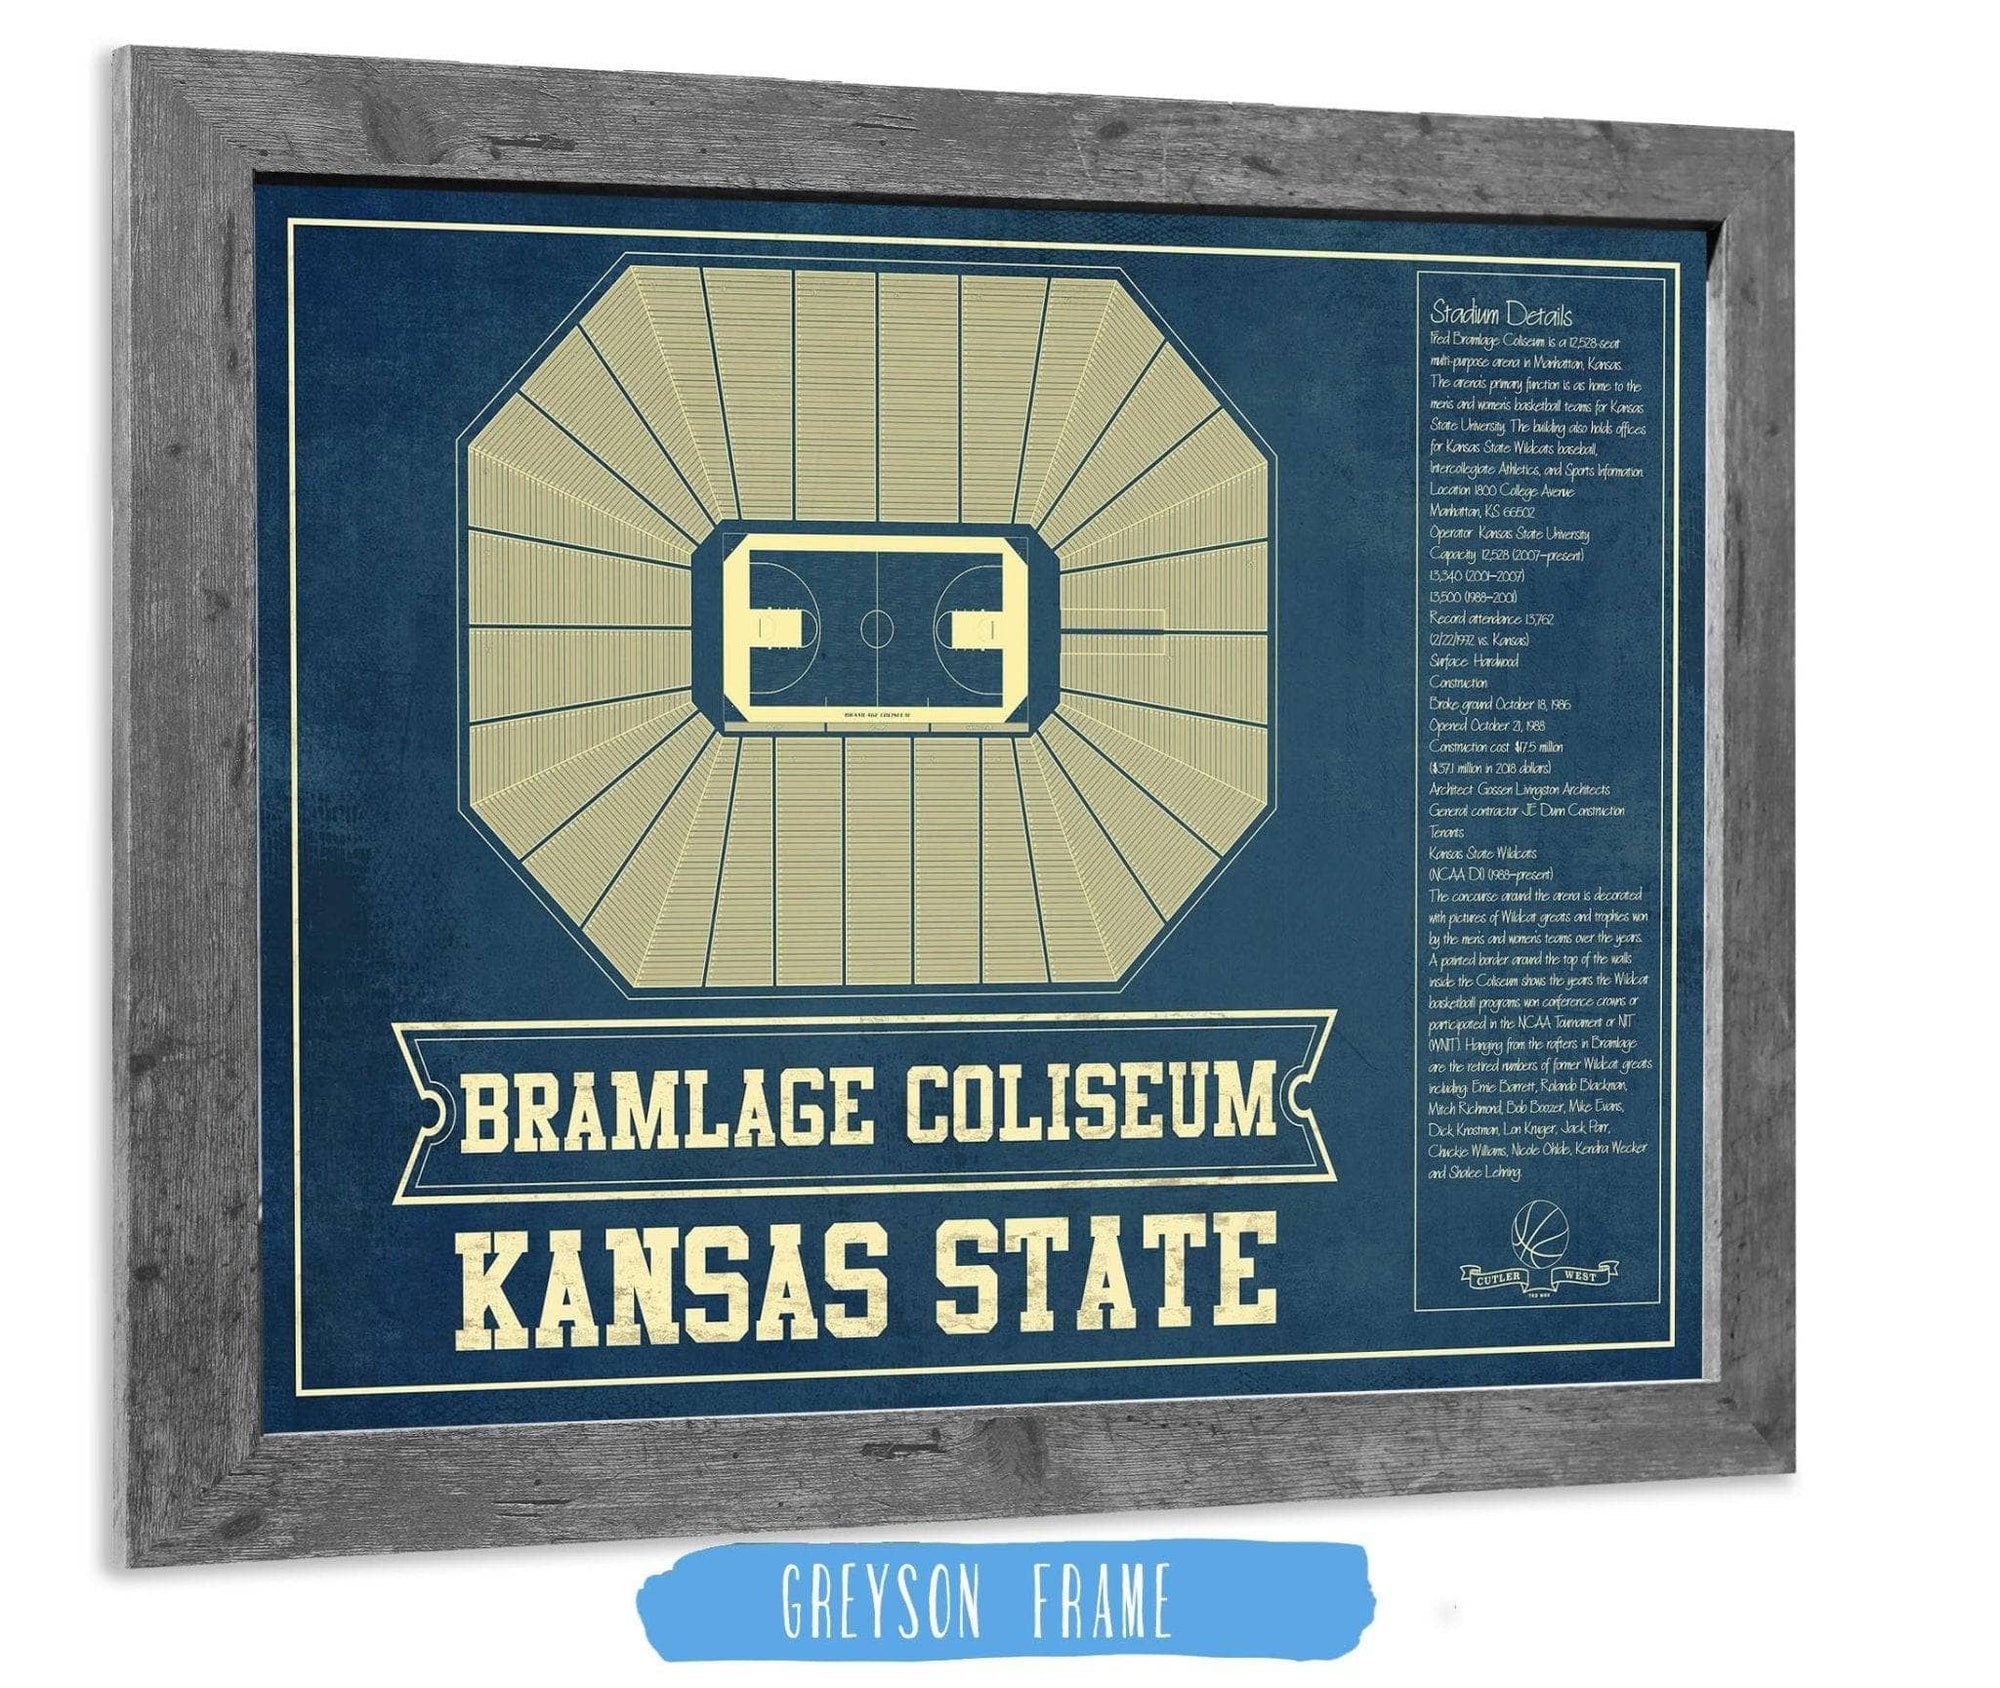 Cutler West Basketball Collection 14" x 11" / Greyson Frame Kansas State Wildcats -Bramlage Coliseum Seating Chart - College Basketball Blueprint Art 675914345_83565